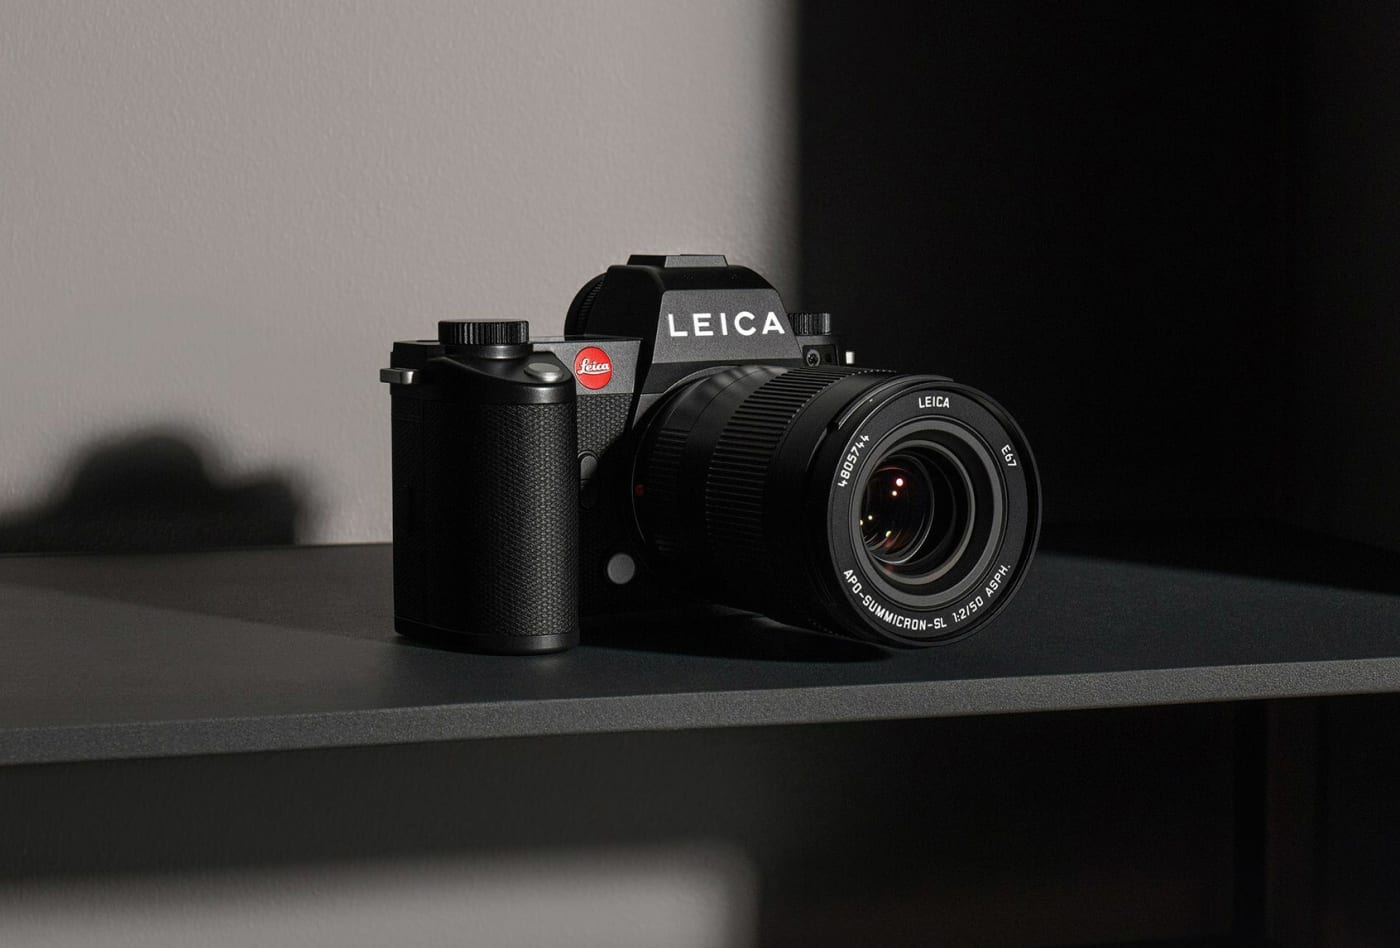 Leica's SL3 mirrorless camera offers a 60-megapixel sensor and 8K video